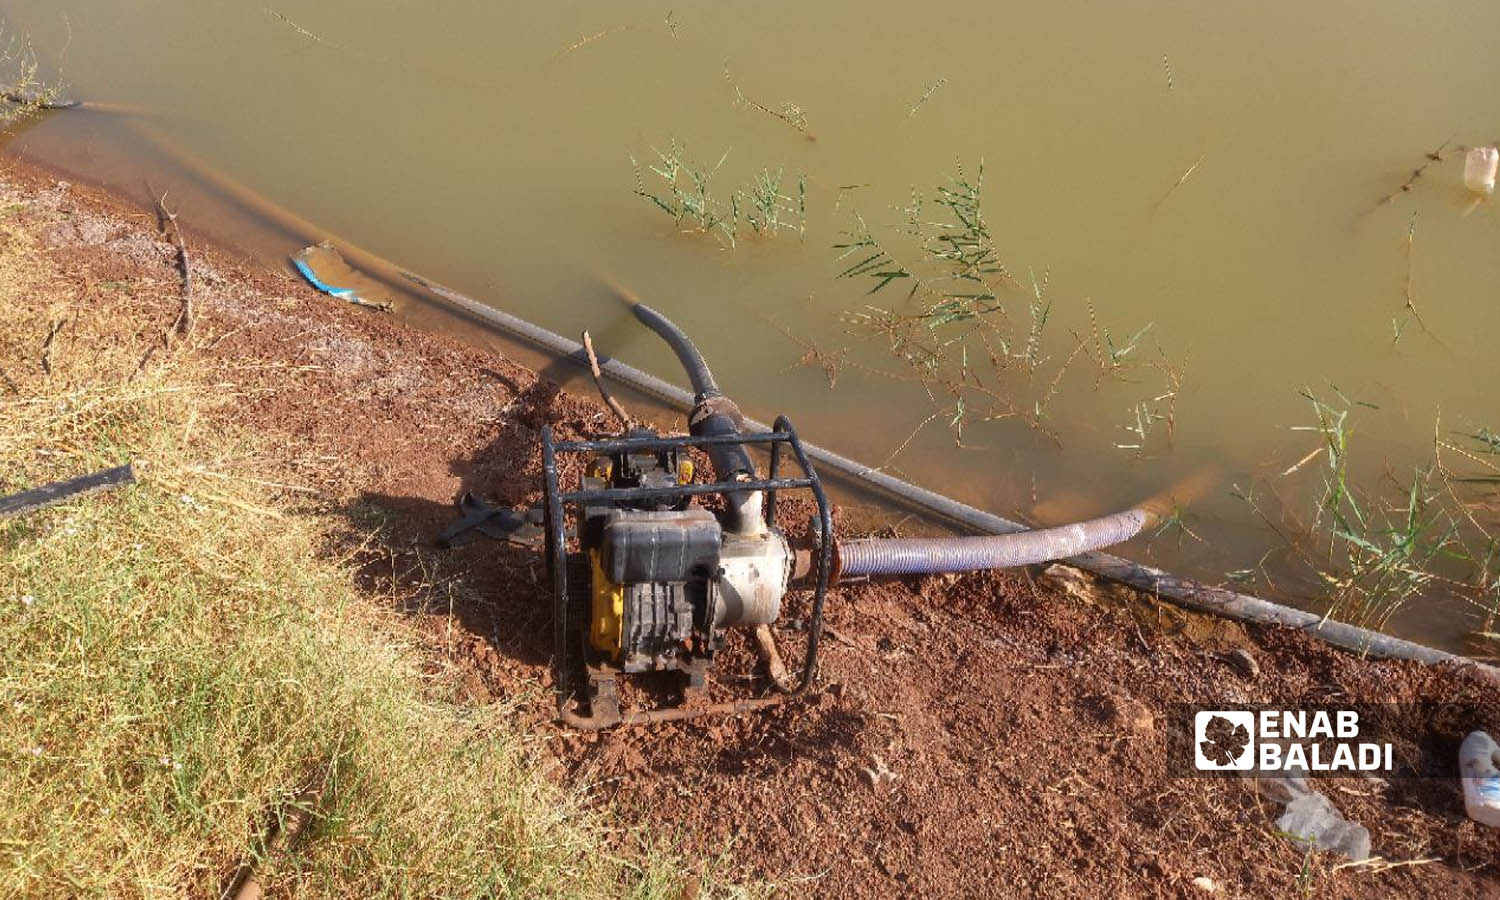 An electric generator used by farmers to pump water for irrigation (Enab Baladi/Halim Muhammad)